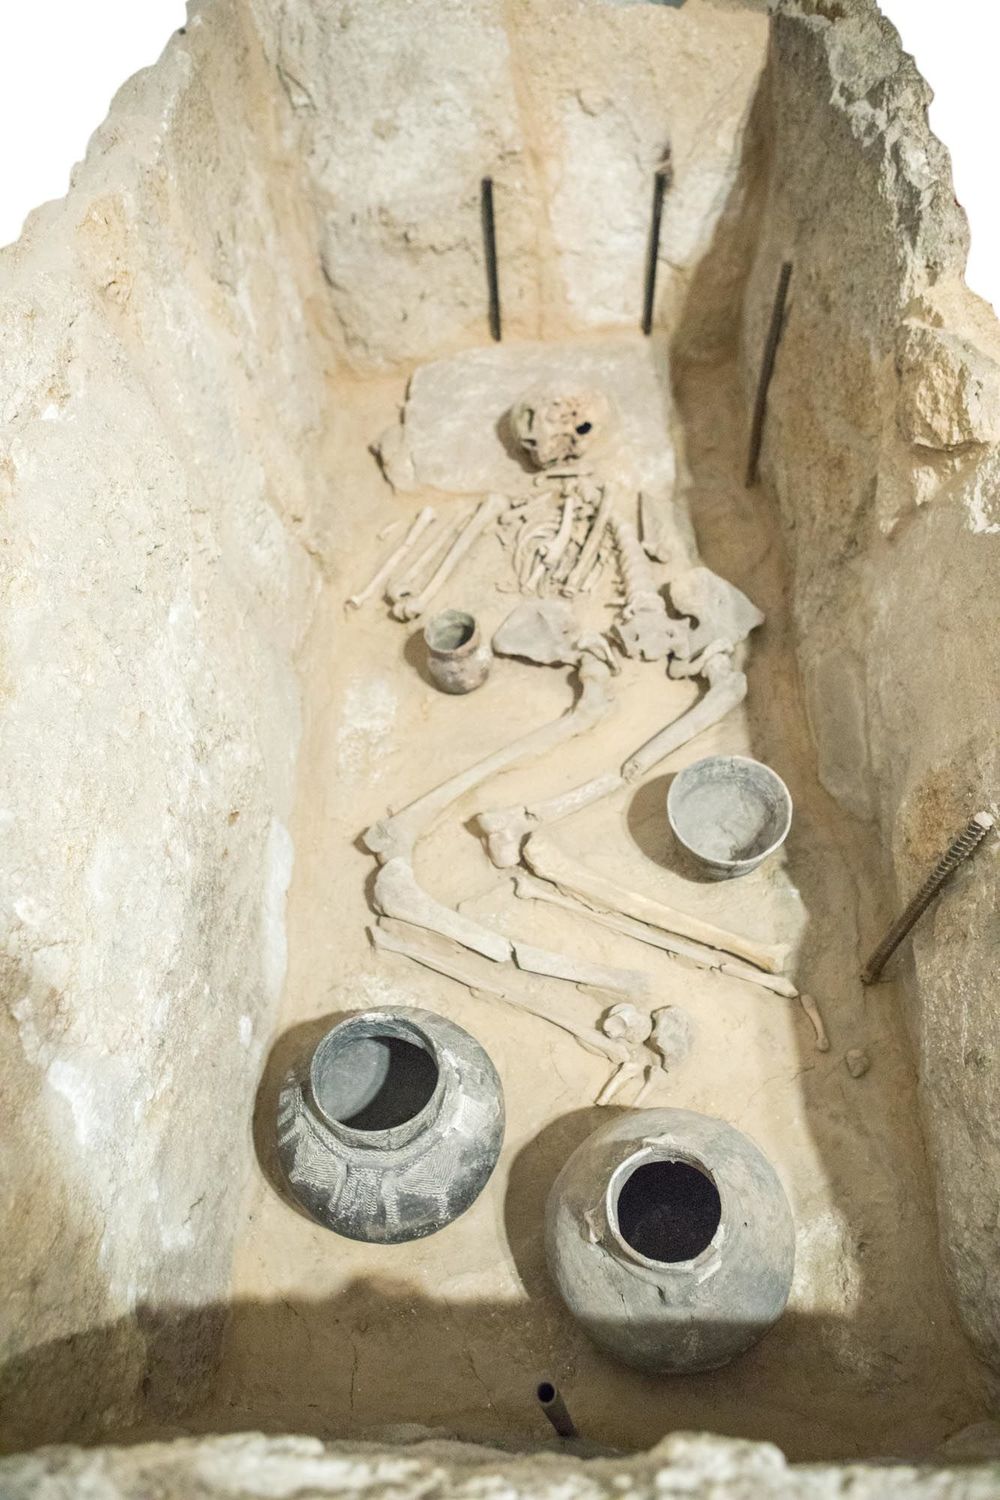 Globular Amphora tomb, c. 2500 to 2000 BC